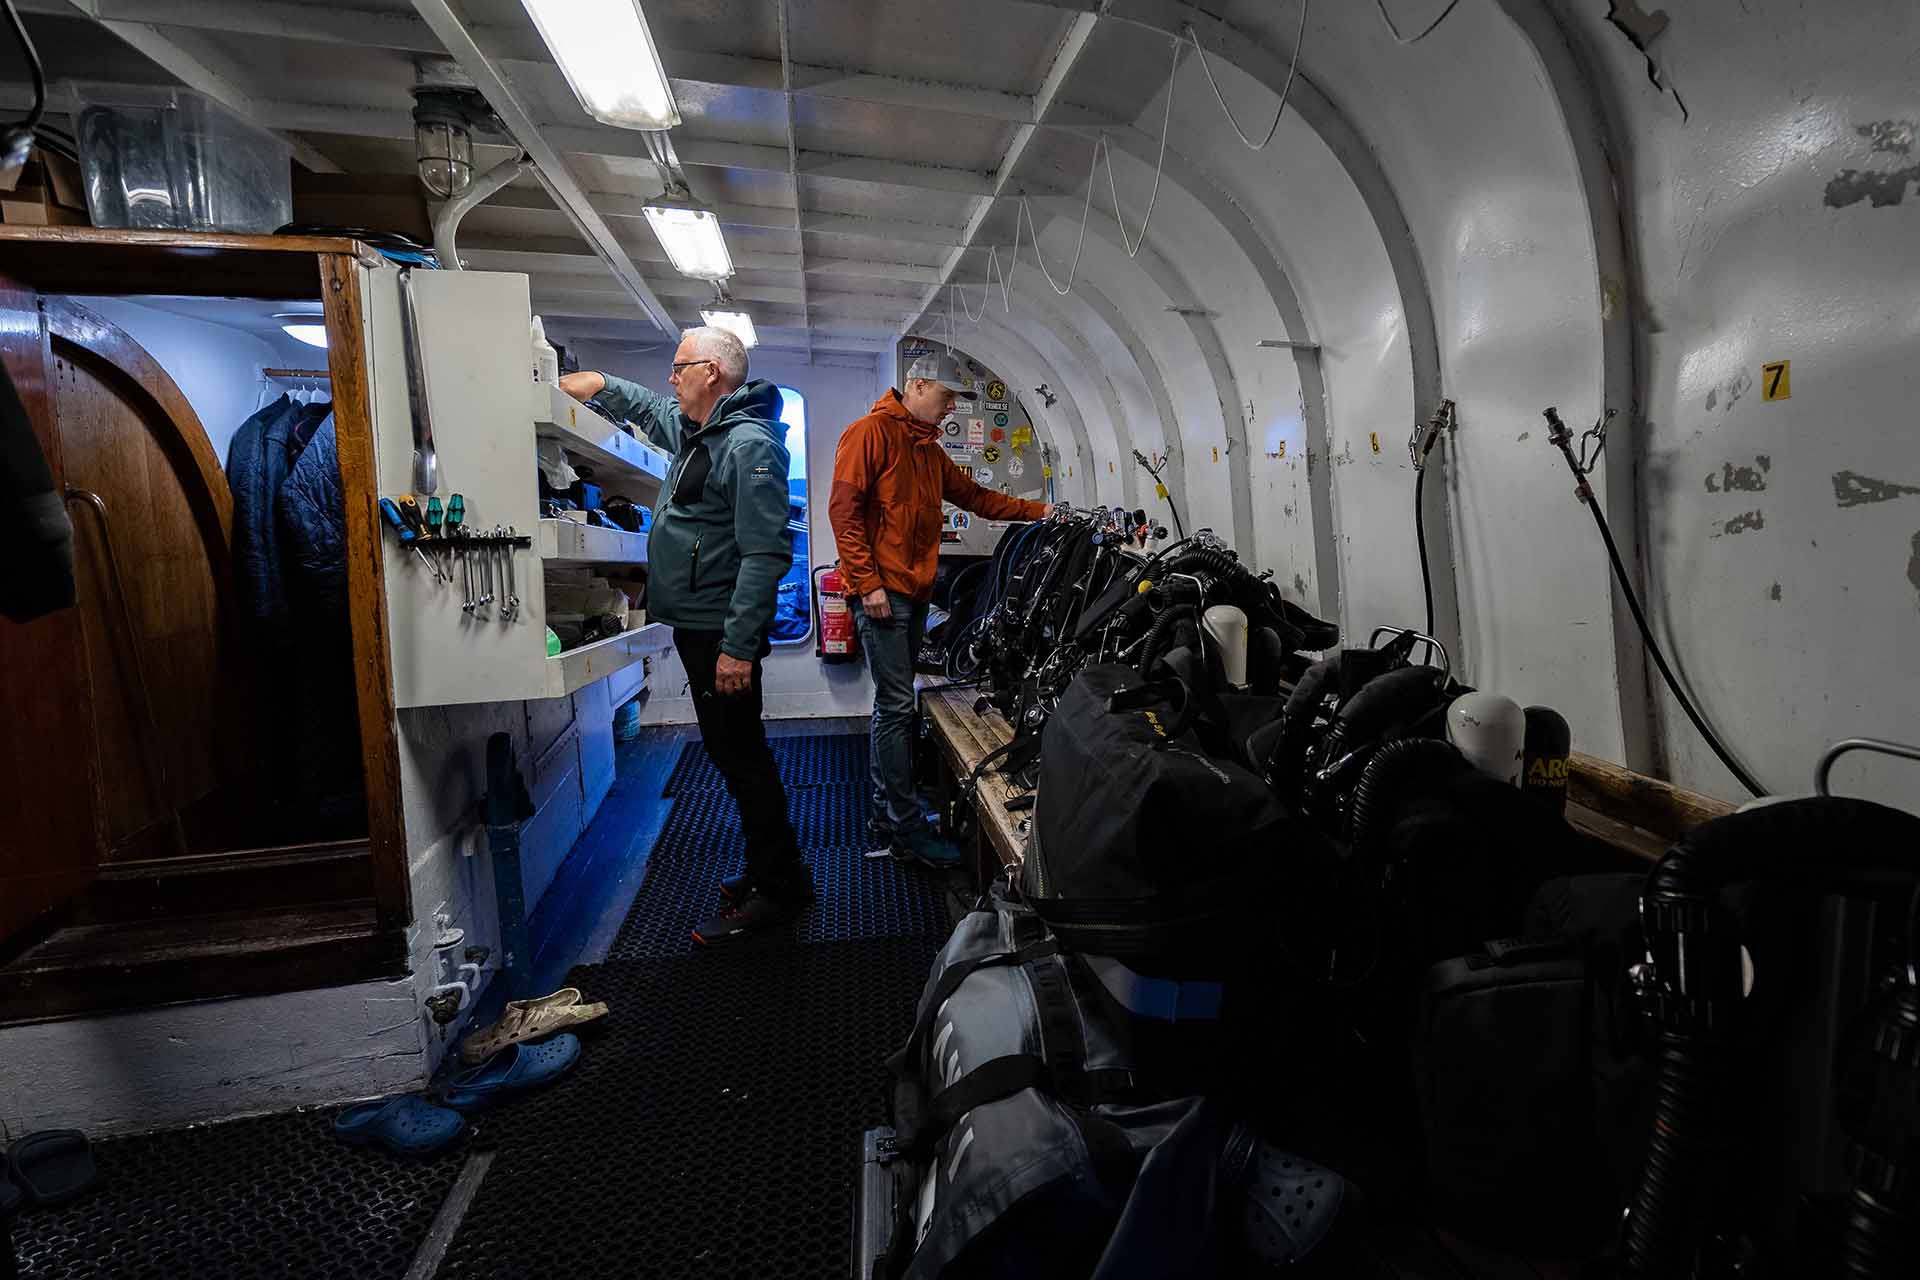 MS Galten Shelter deck full of diving gear for wreck diving in Narvik